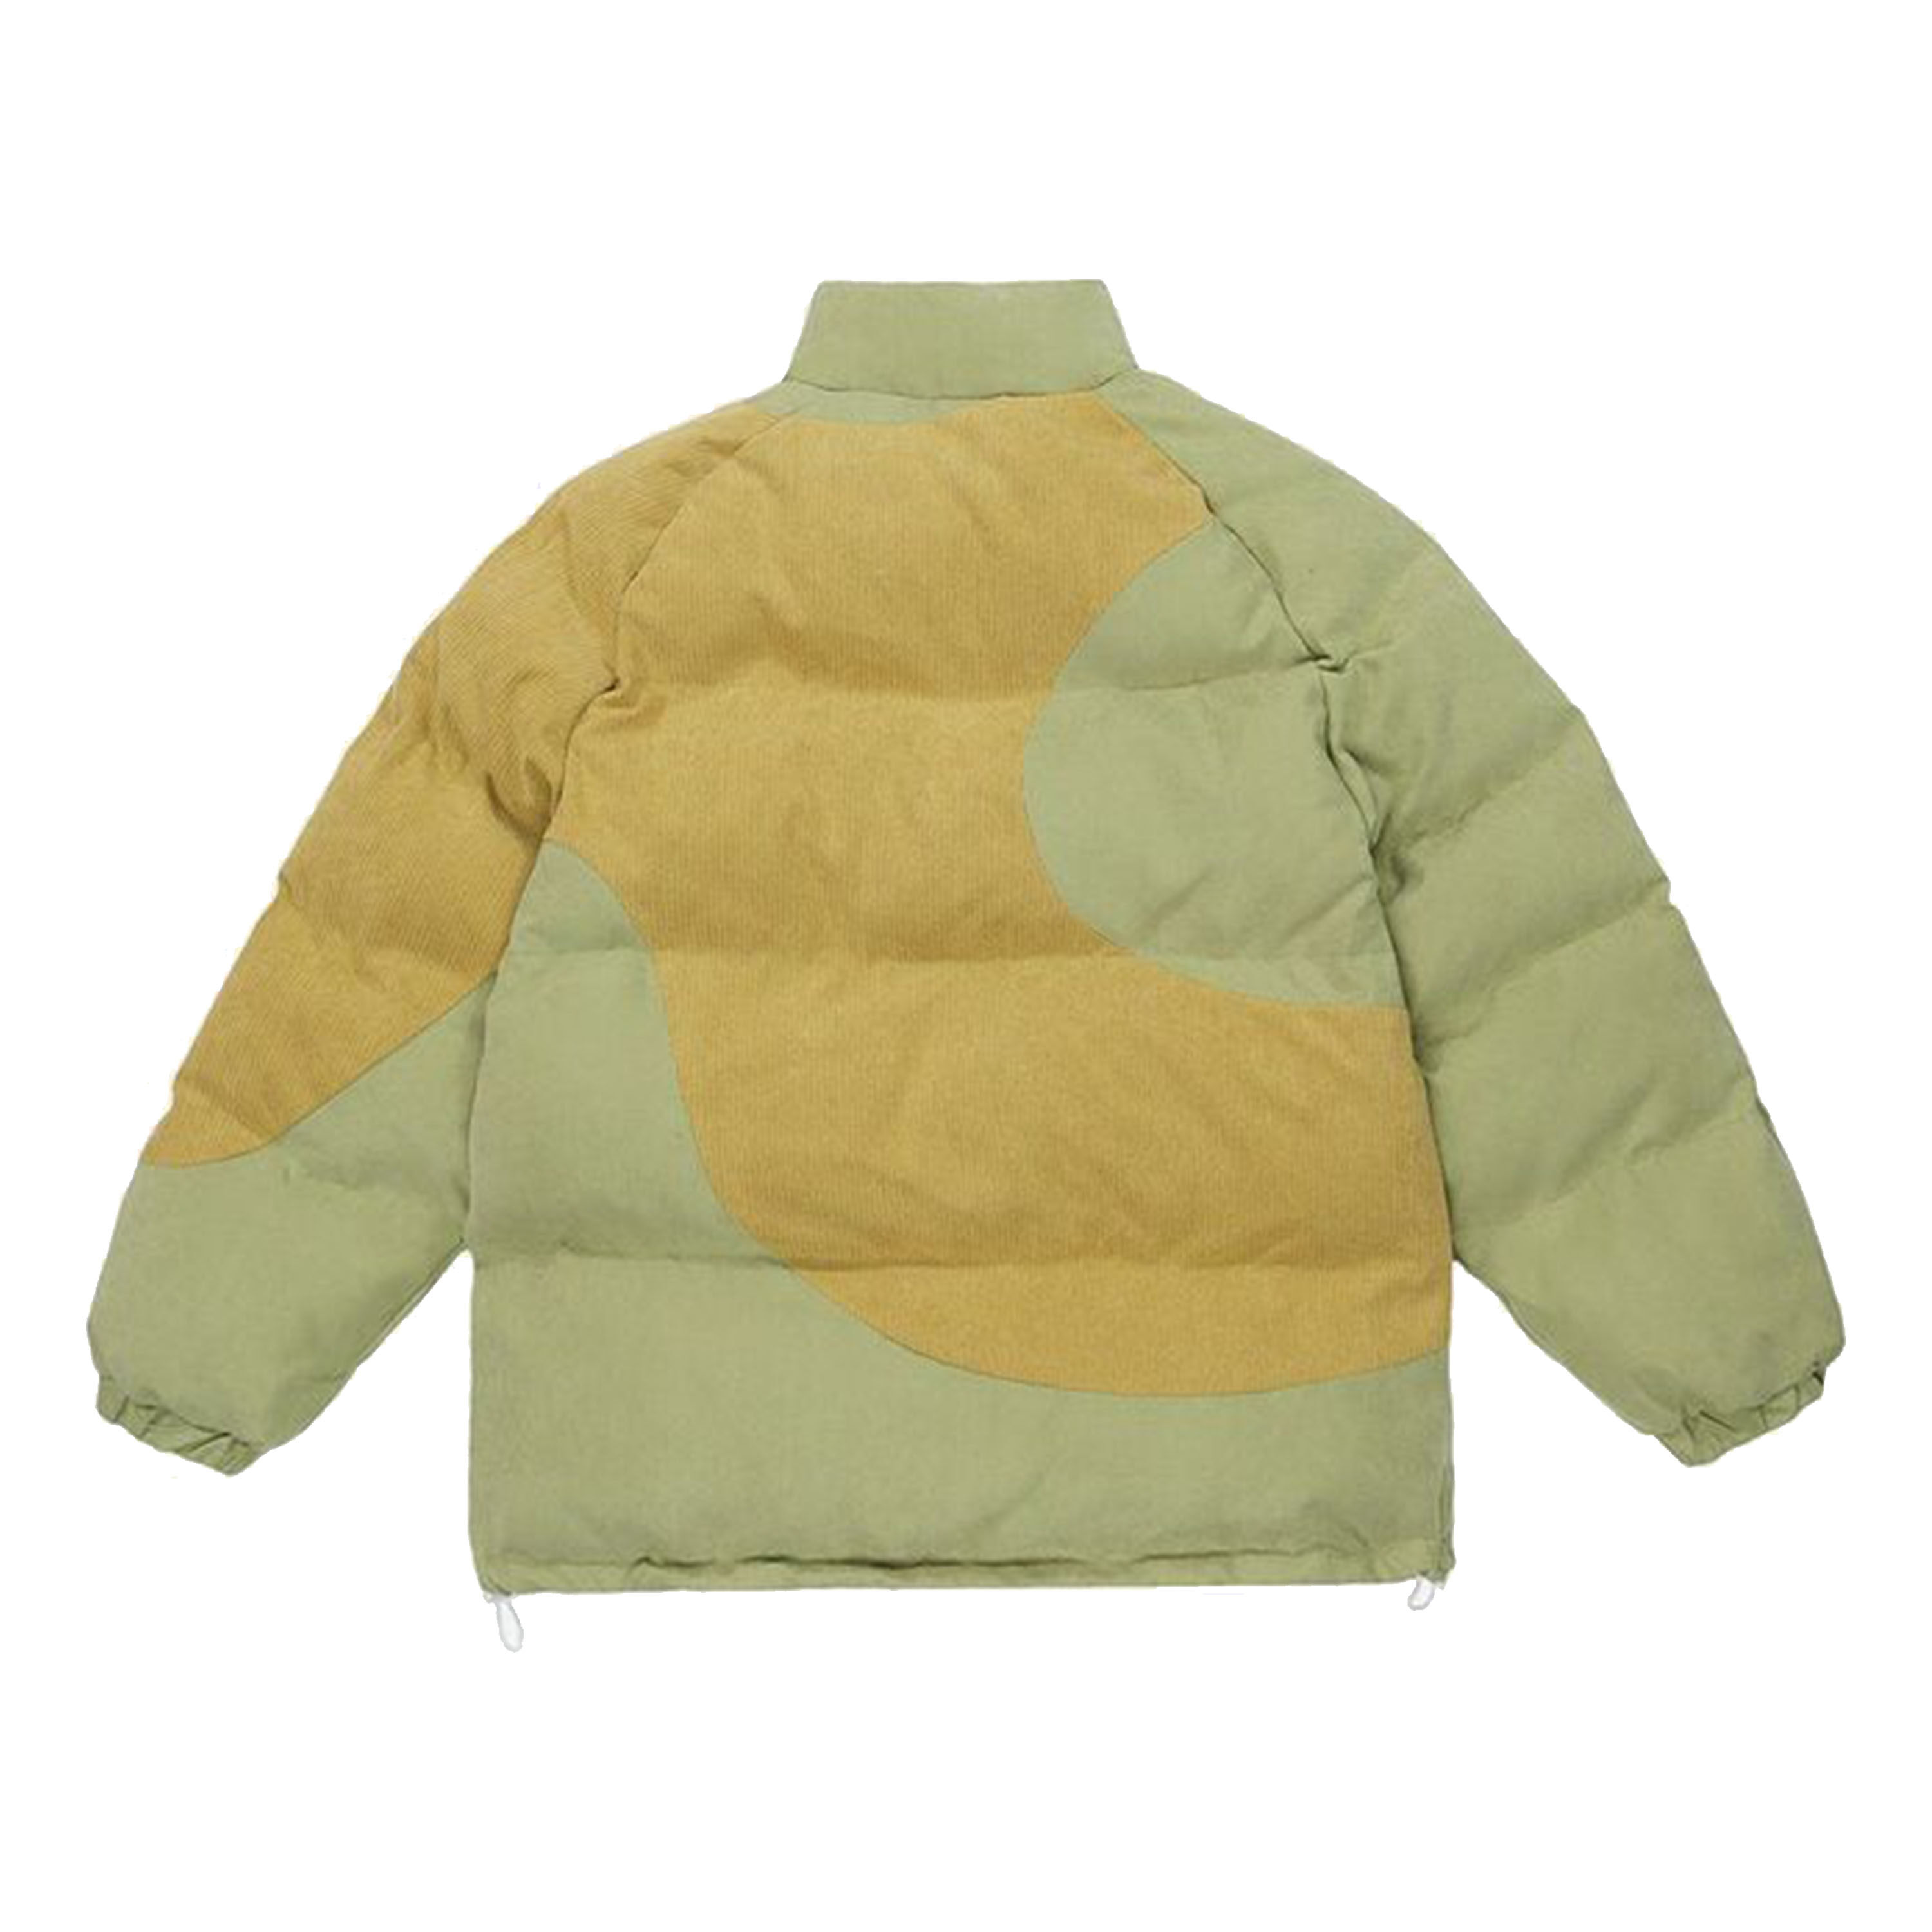 Jacket, Puffer Jacket, 80% Duck Down Filling, Oversized Color Block Print, Elastic Cuffs Zipper